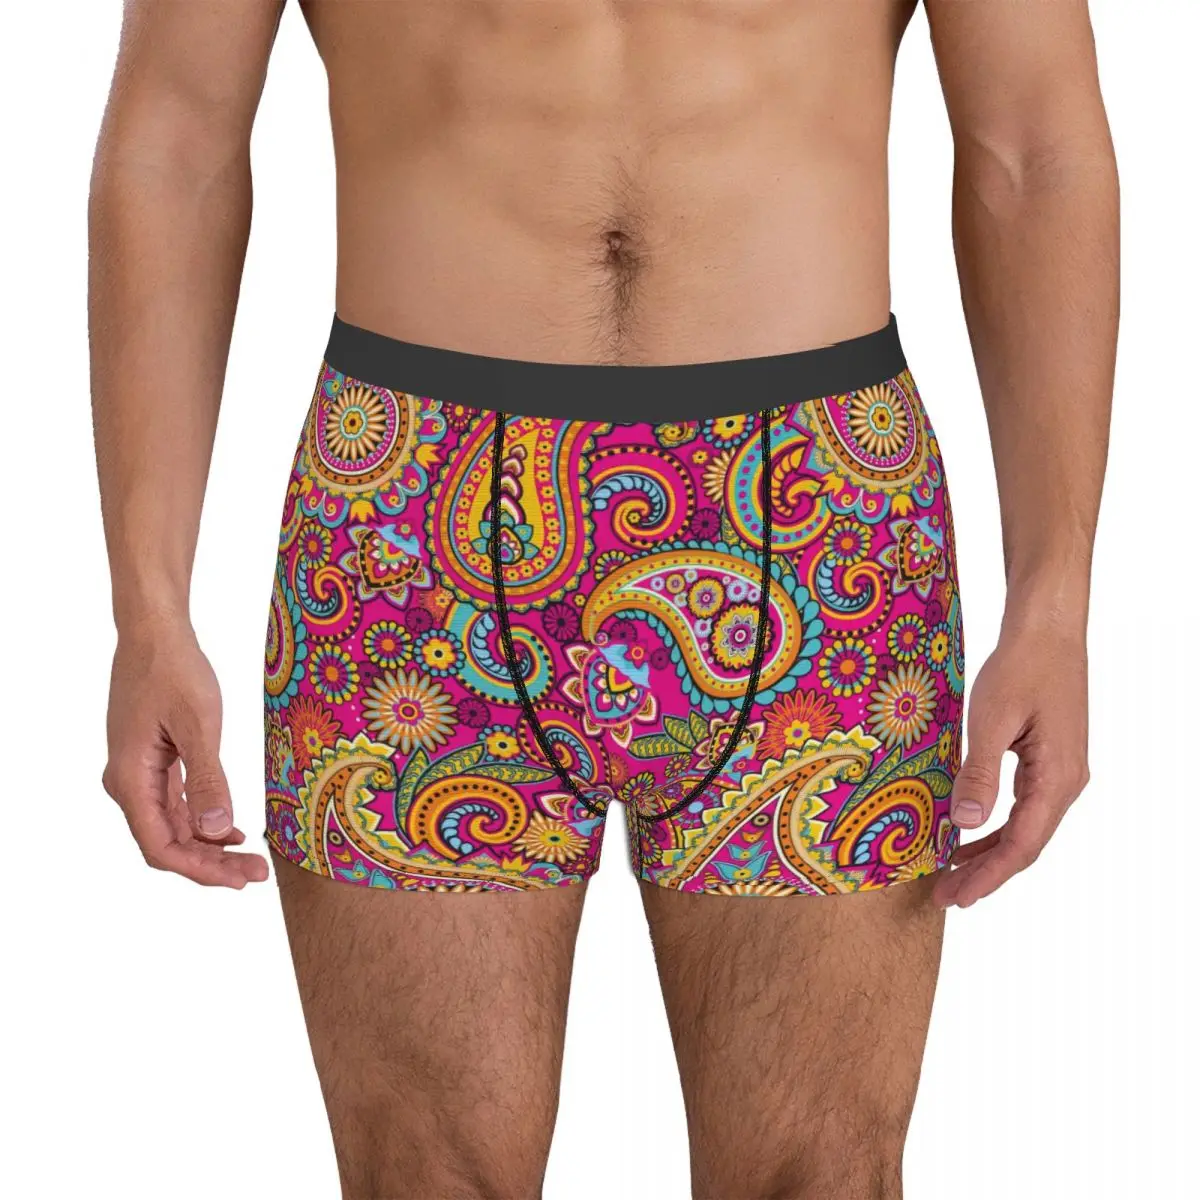 Paisley Drawing Underpants Cotton Panties Men's Underwear Ventilate Shorts